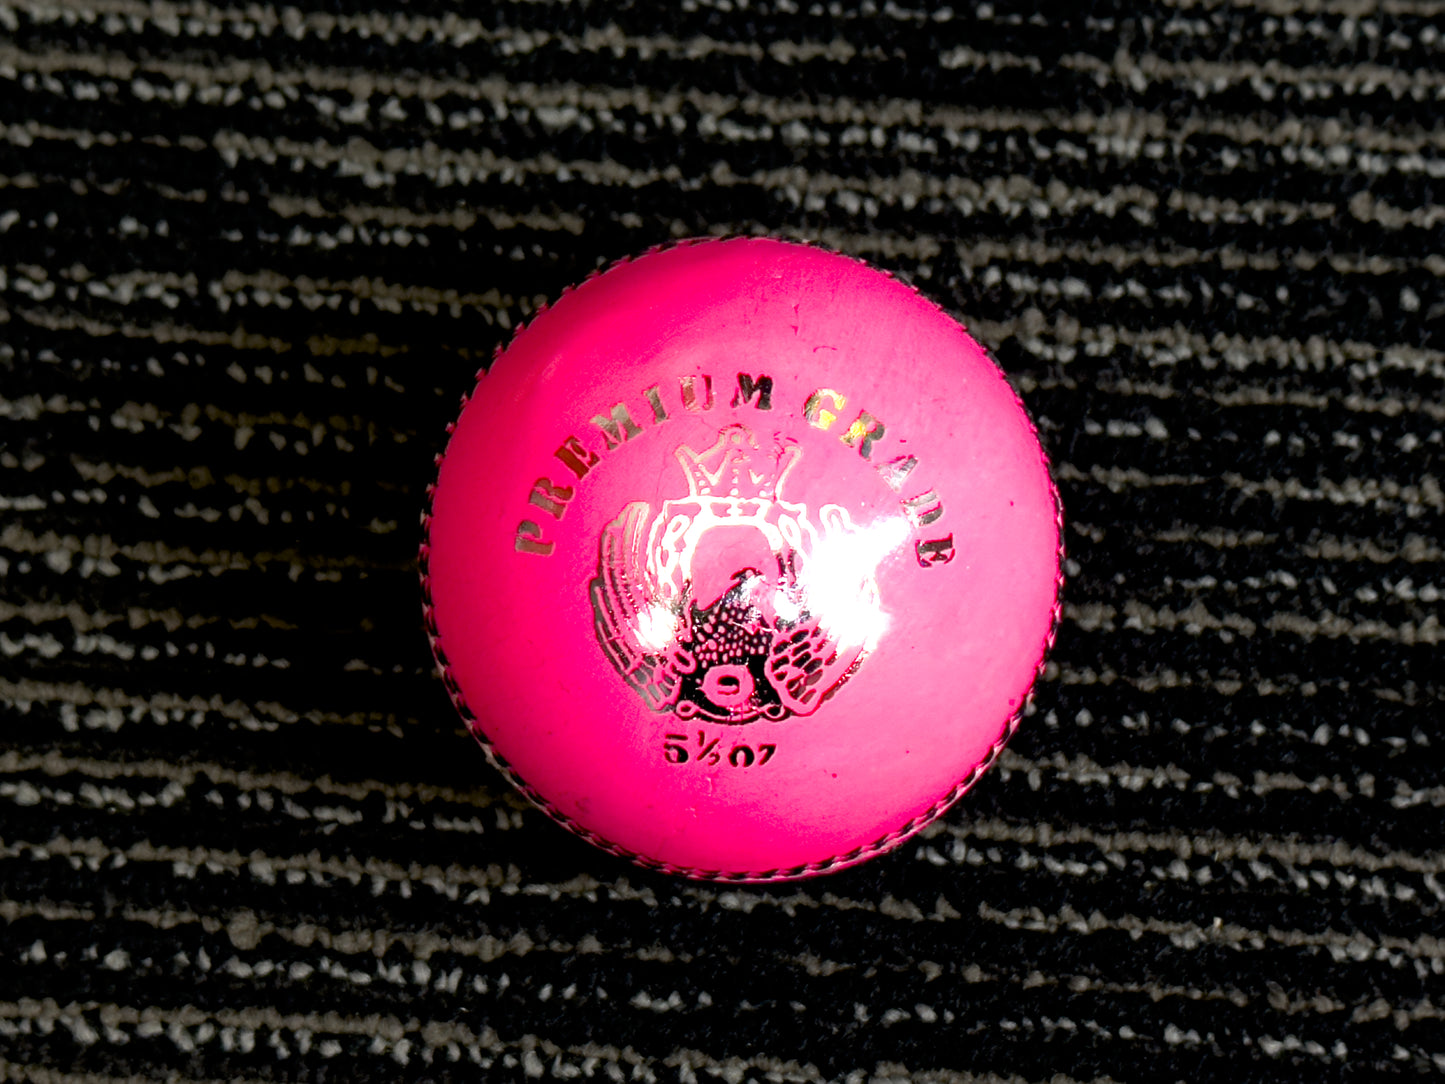 Black Ash Premium grade Pack of 6 Pink Cricket Leather Balls 156 Grams